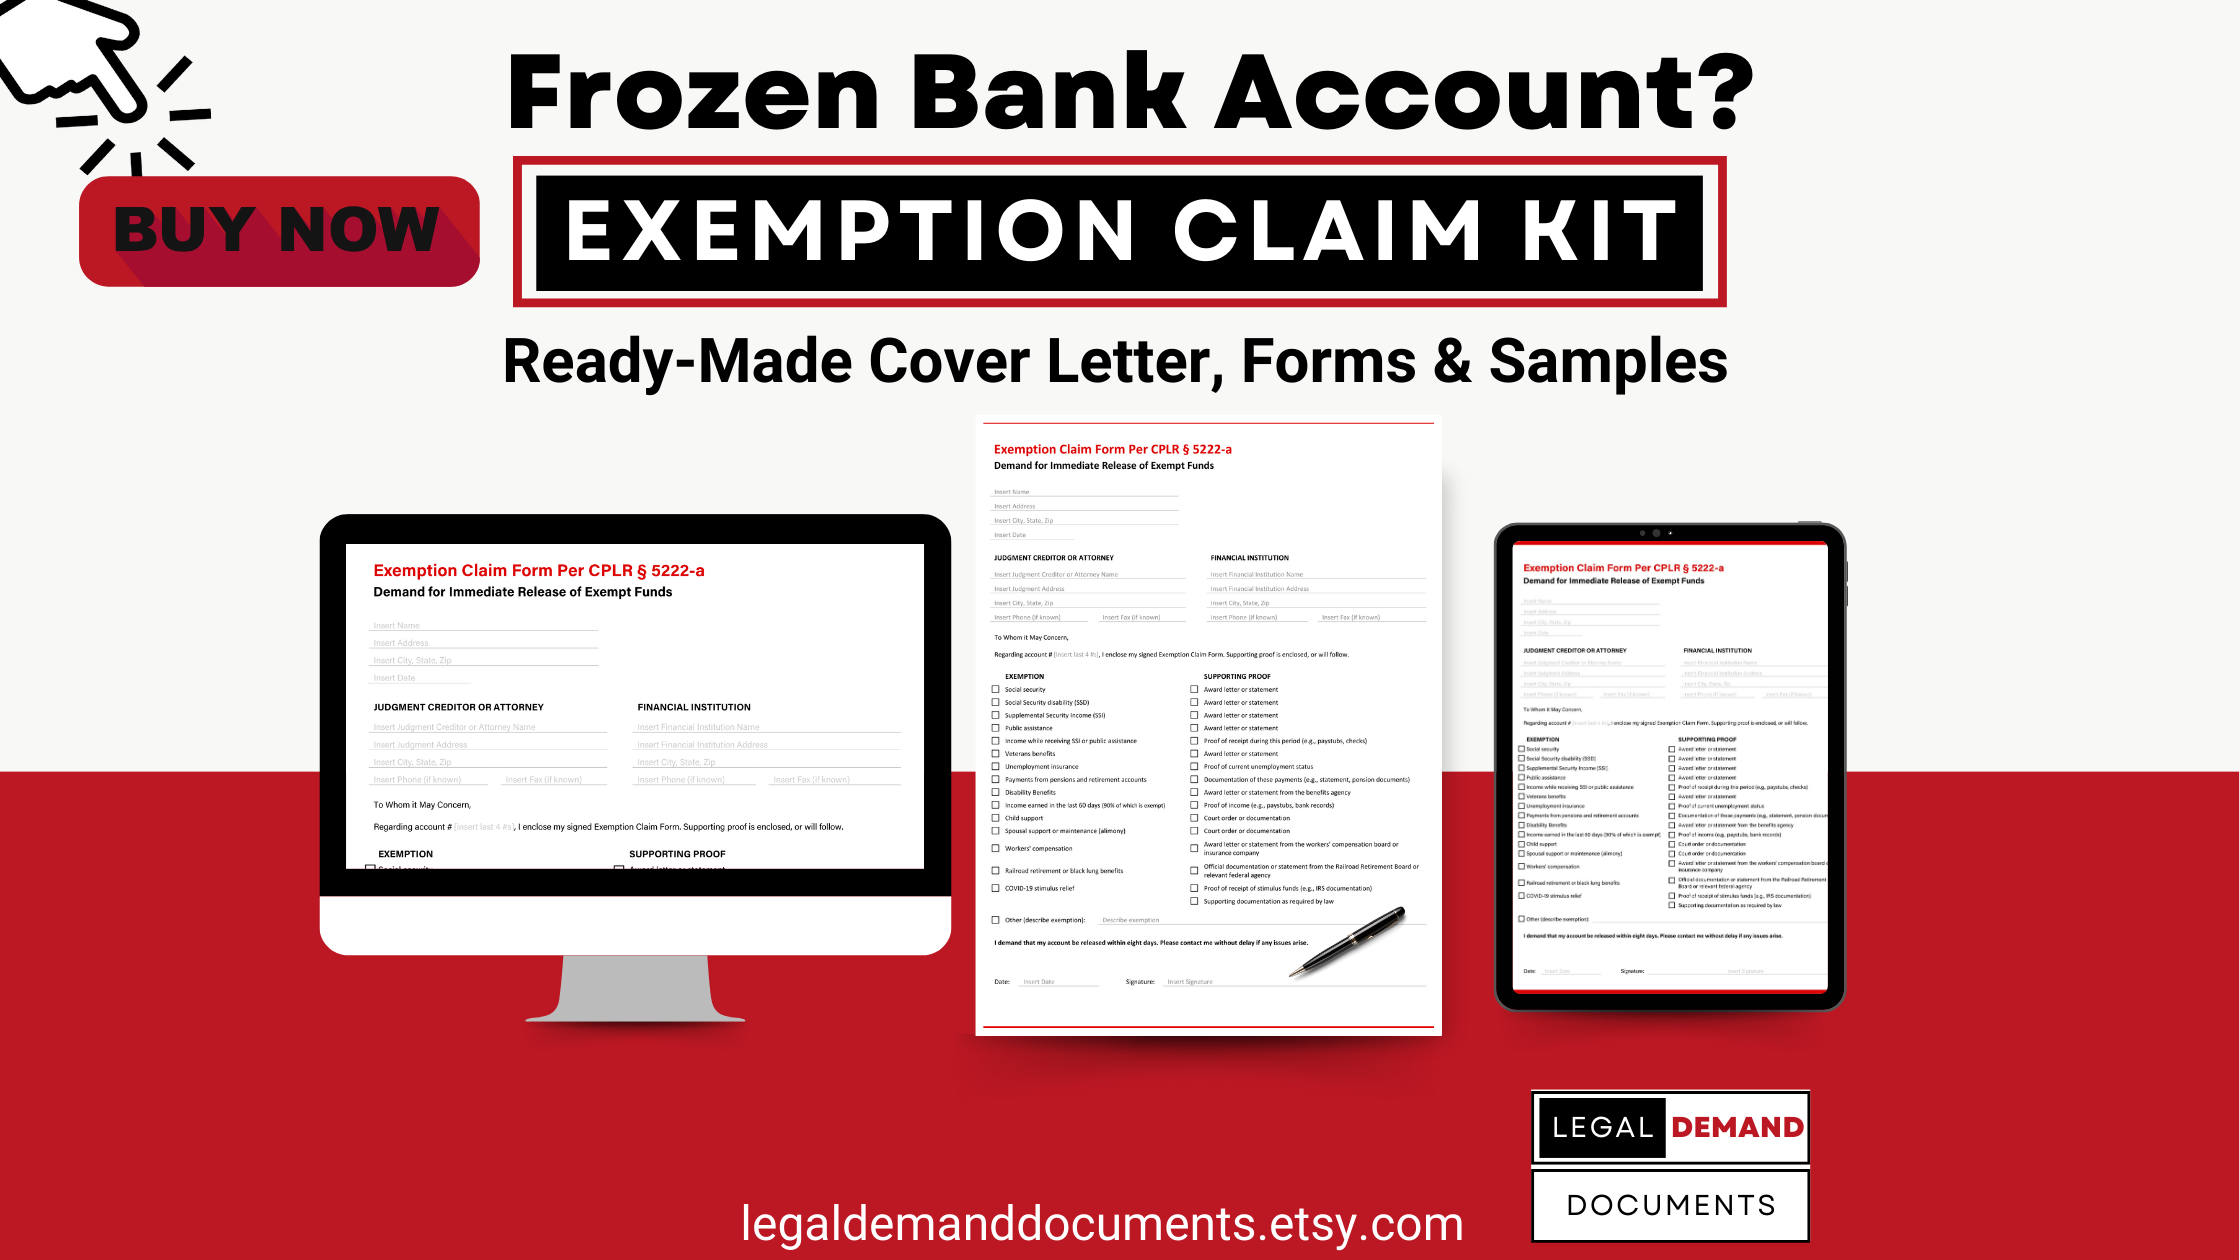 Exemption Claim Kit